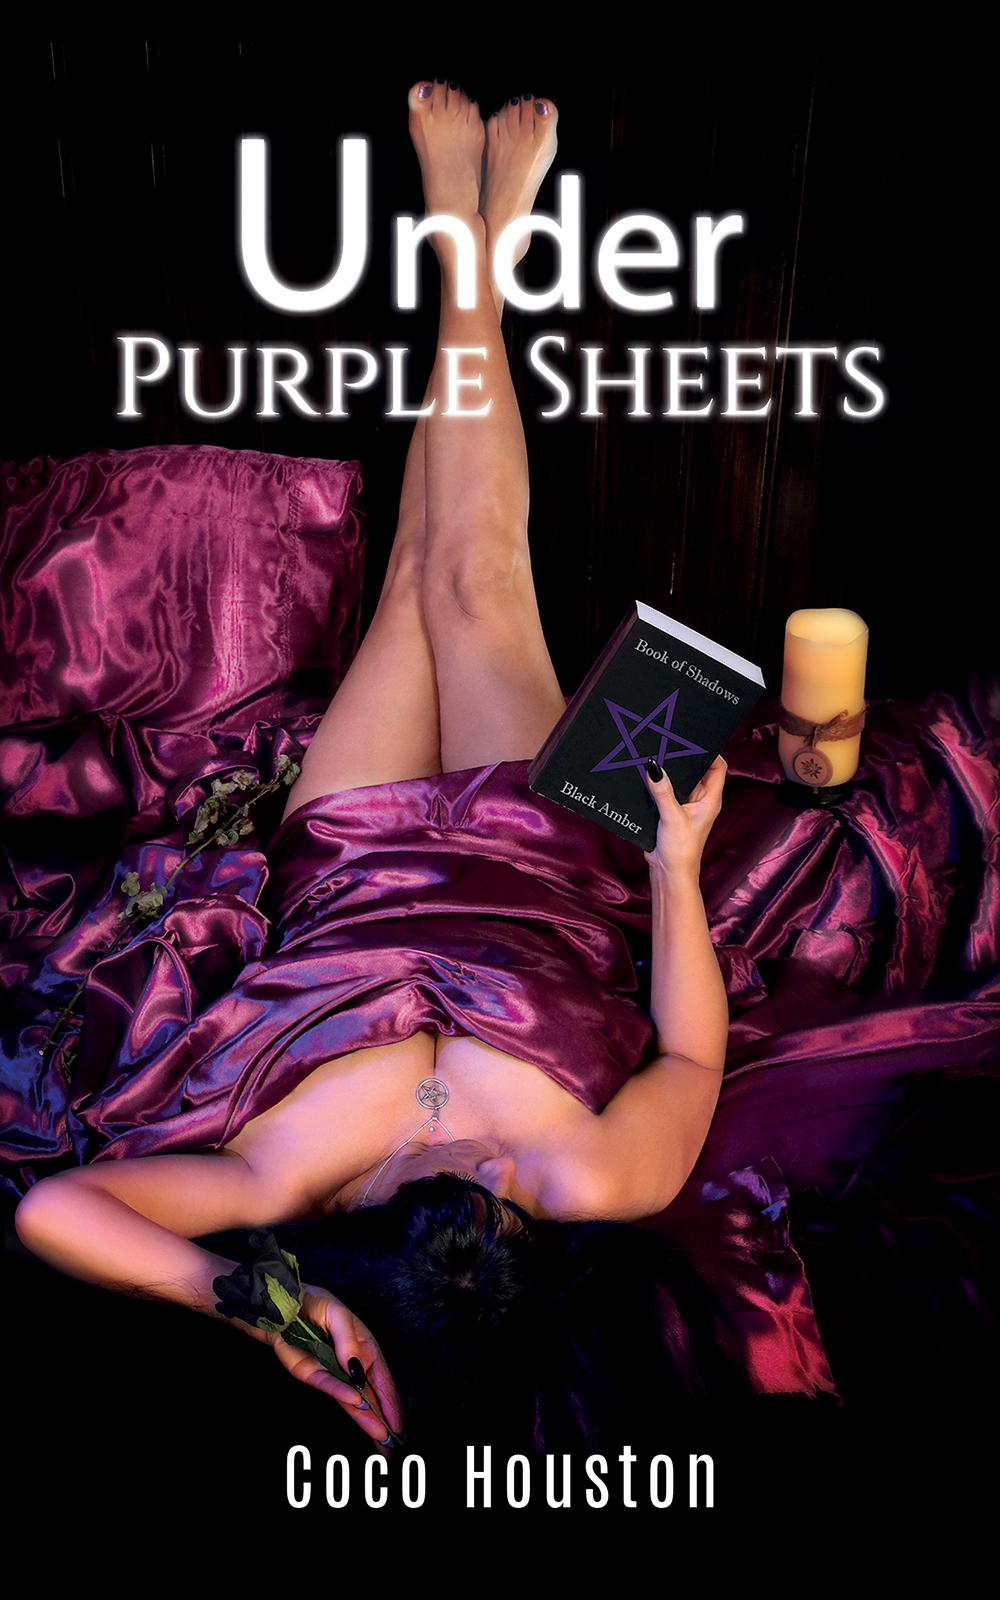 Under Purple Sheets Coco Houston Austin Macauley Publishers 2019-10-30 About - photo 1